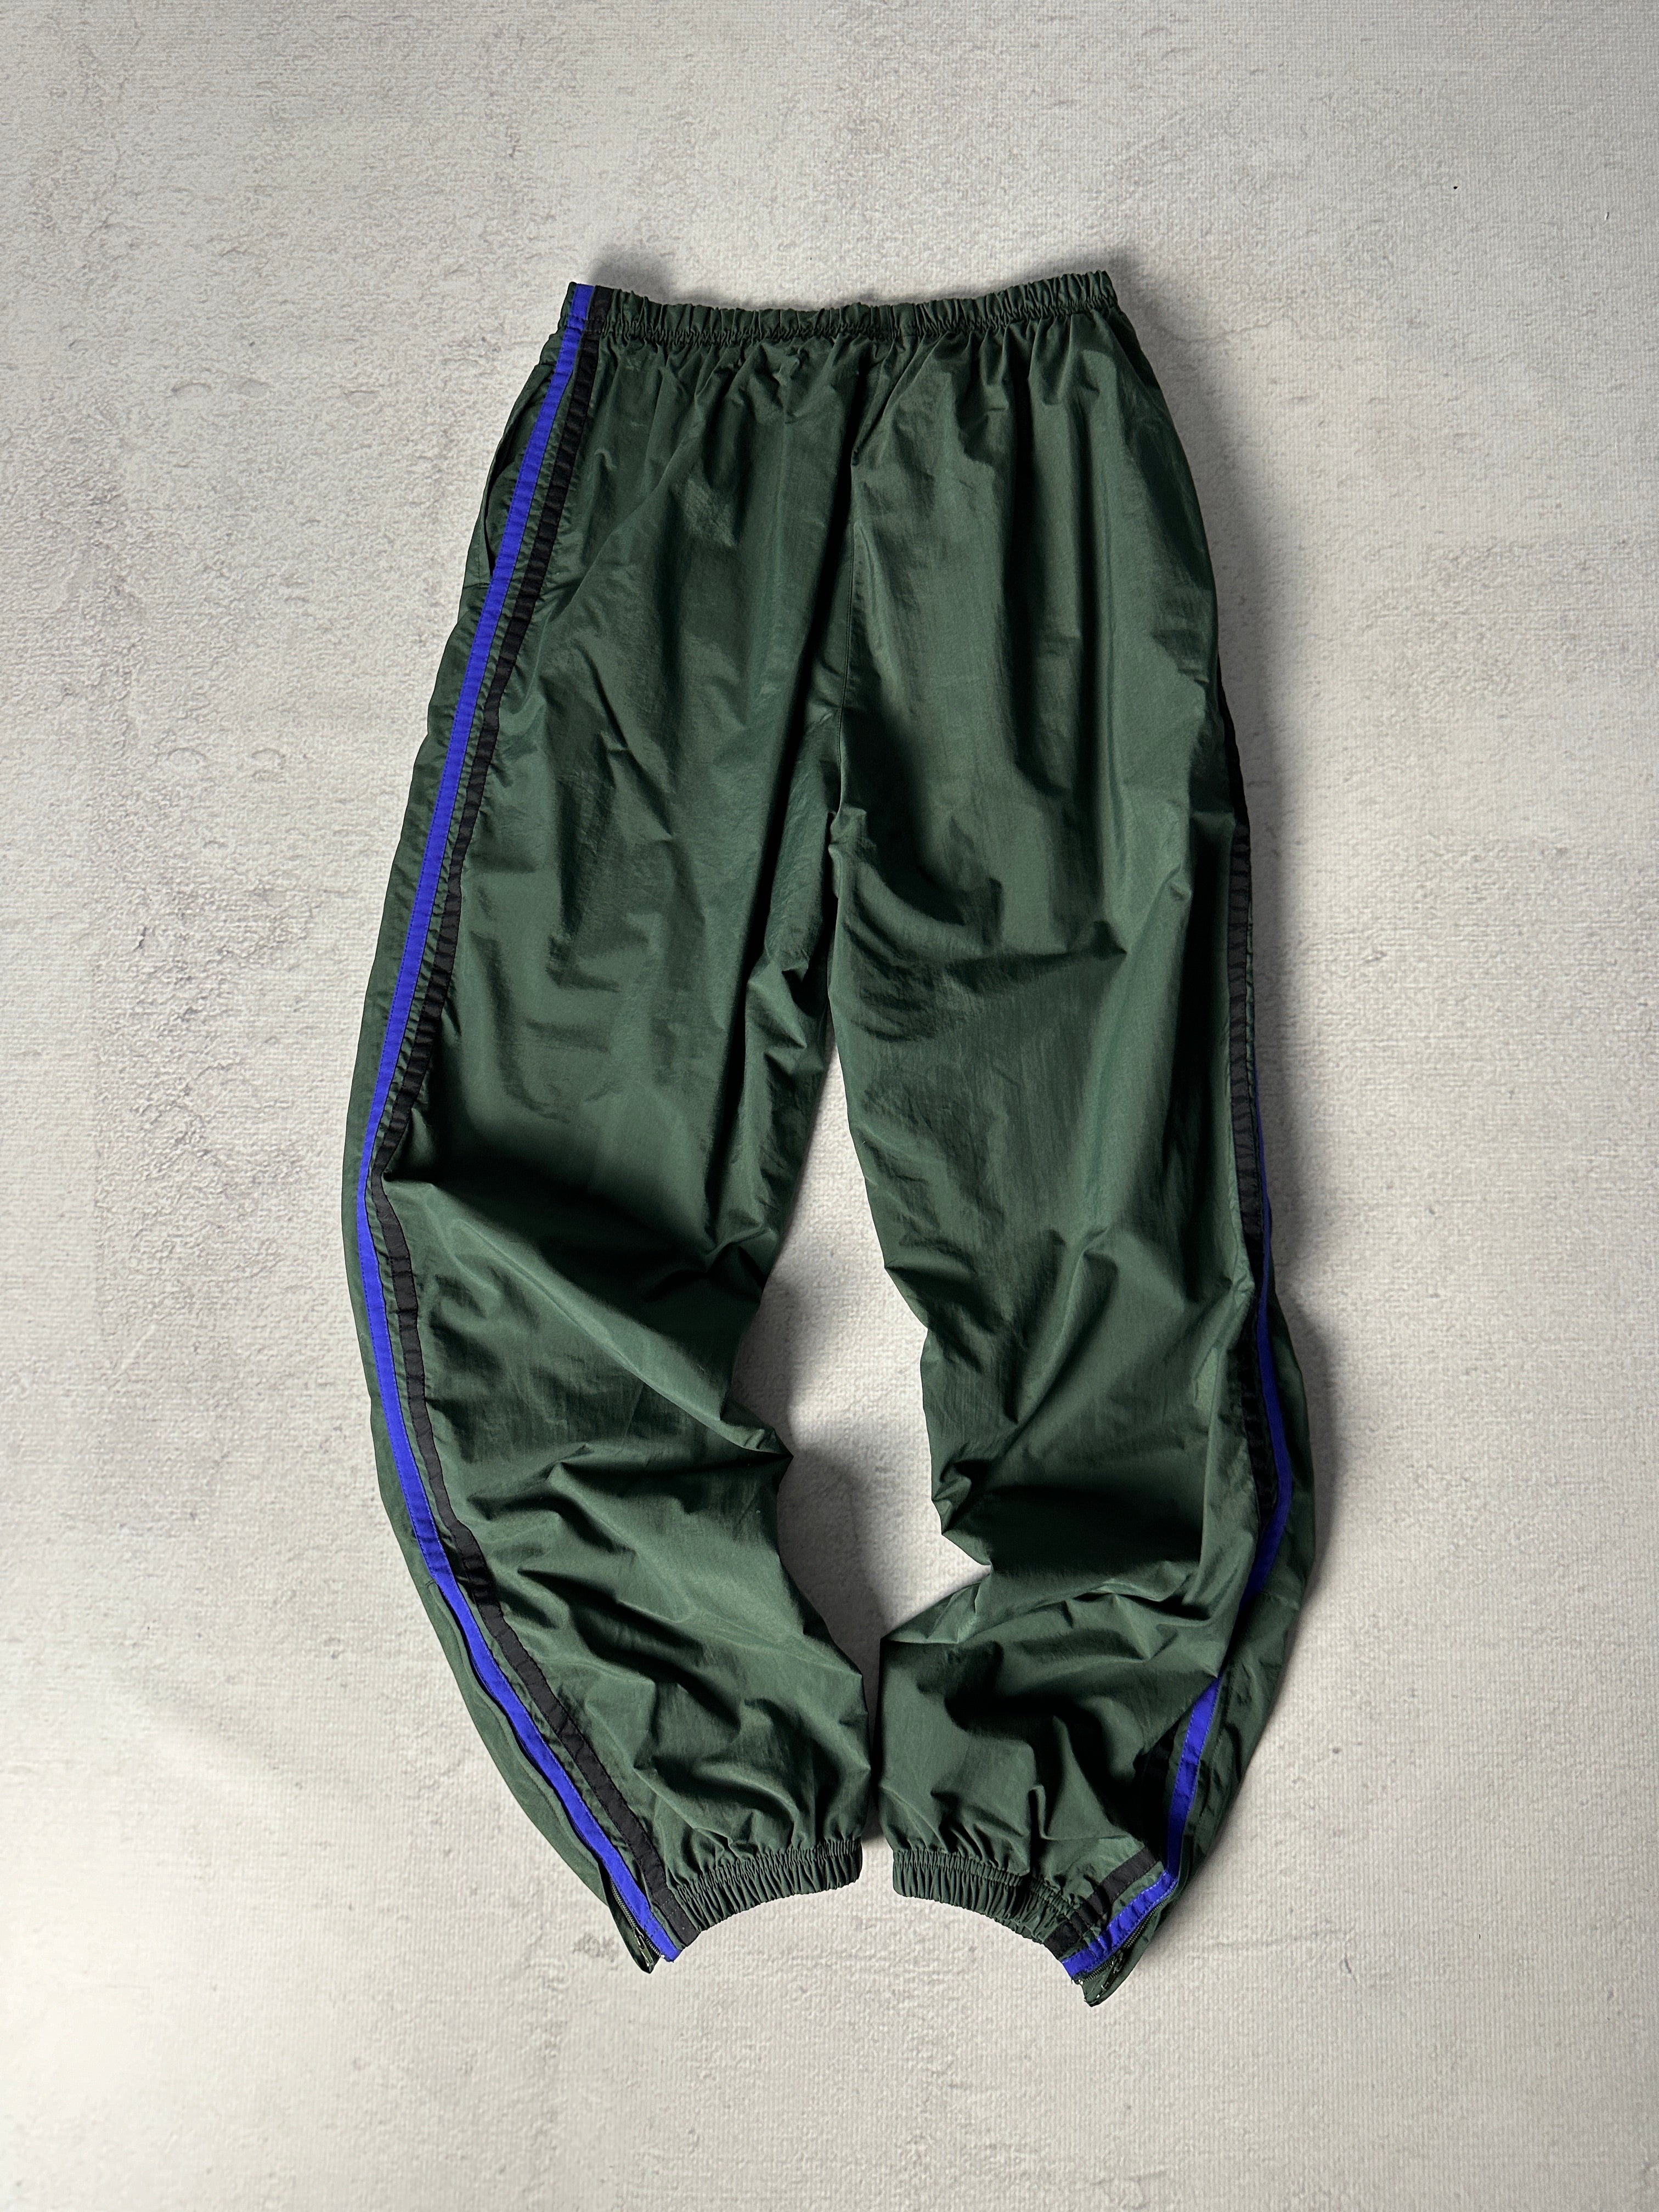 Vintage Nautica Competition Cuffed Track Pants - Men's Medium